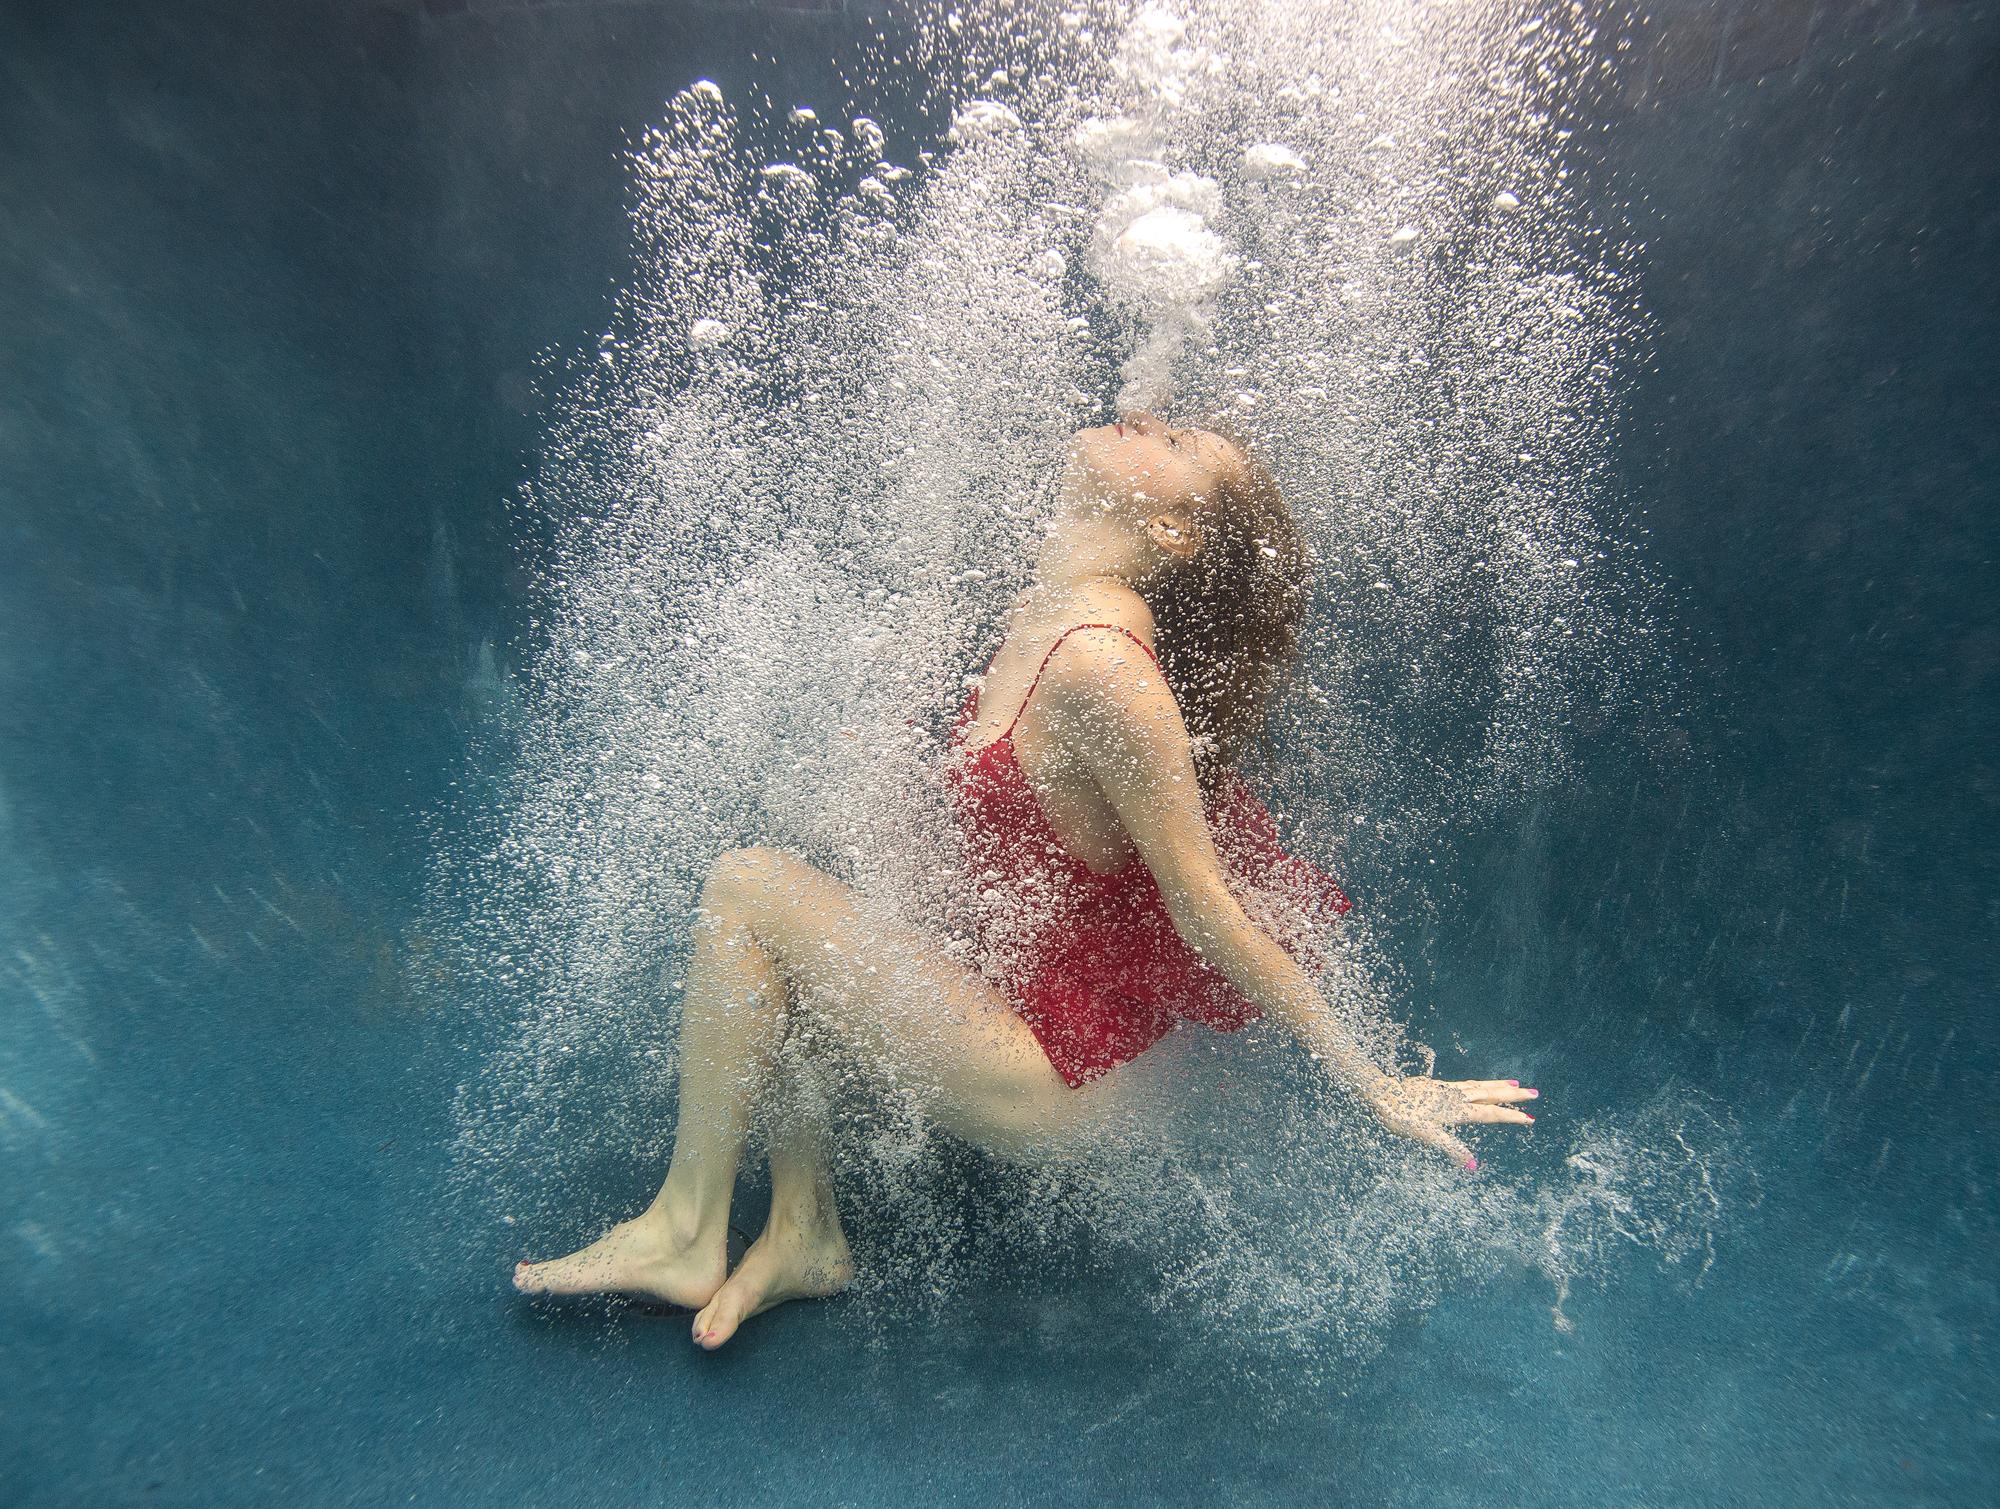 Alex Sher Figurative Photograph - The Turn - underwater photograph - archival pigment print 18x24"